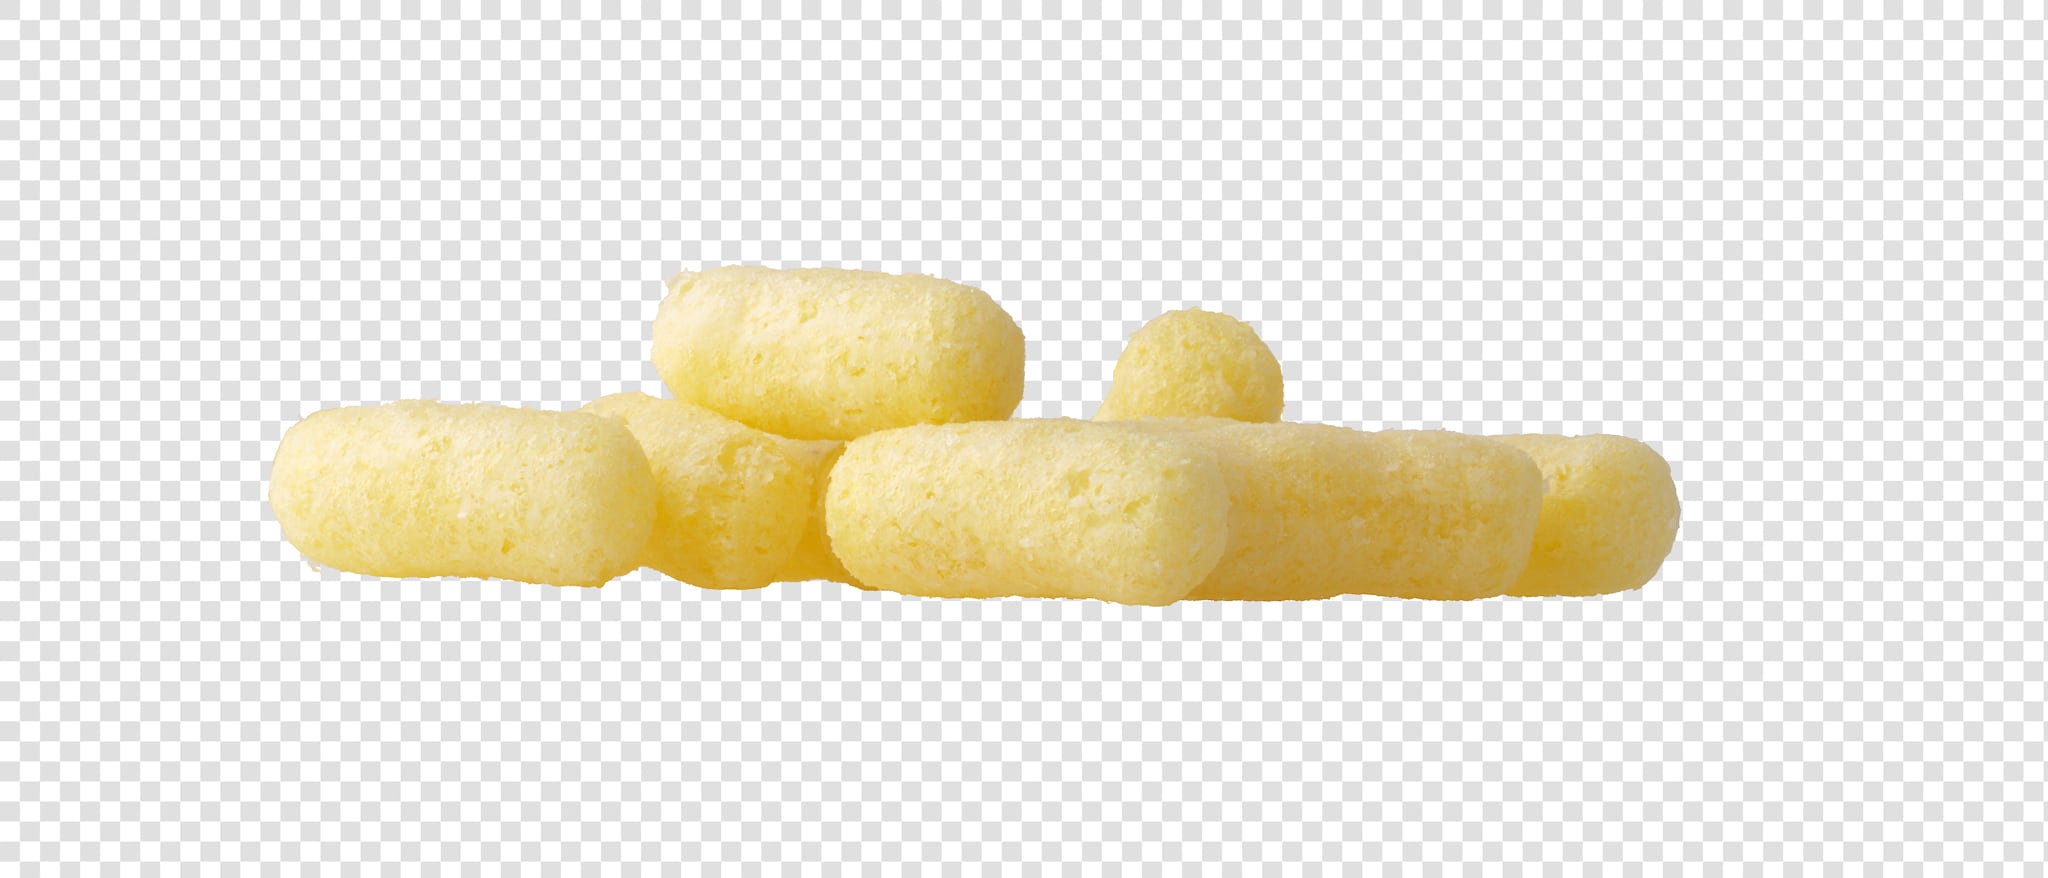 Corn sticks image with transparent background